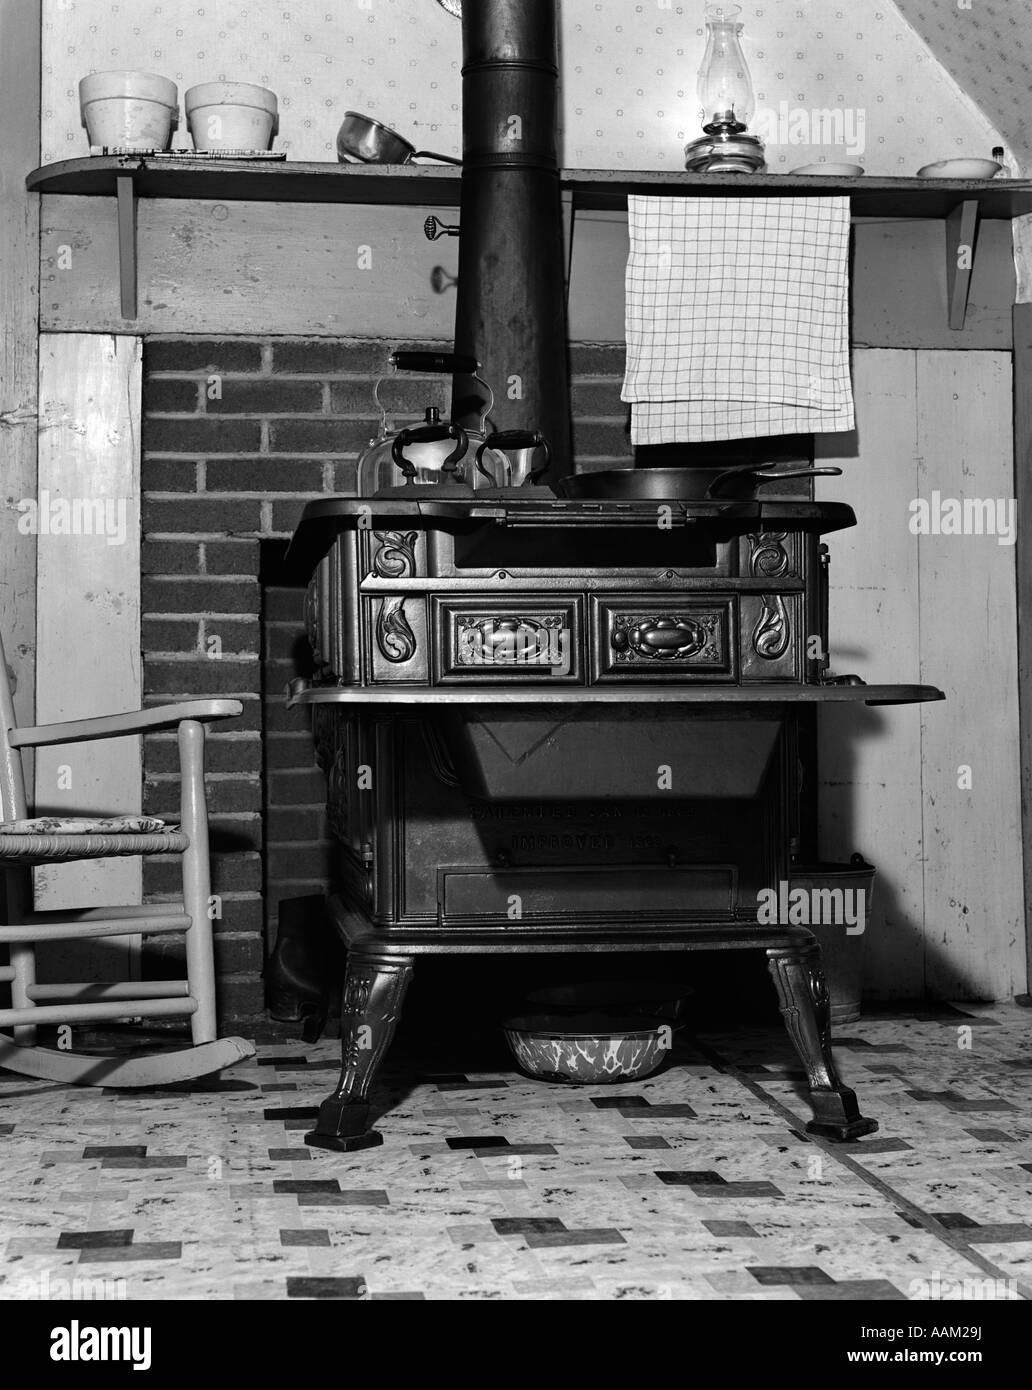 1920s 1930s KITCHEN INTERIOR FOCUSED ON WOOD BURNING STOVE Stock Photo